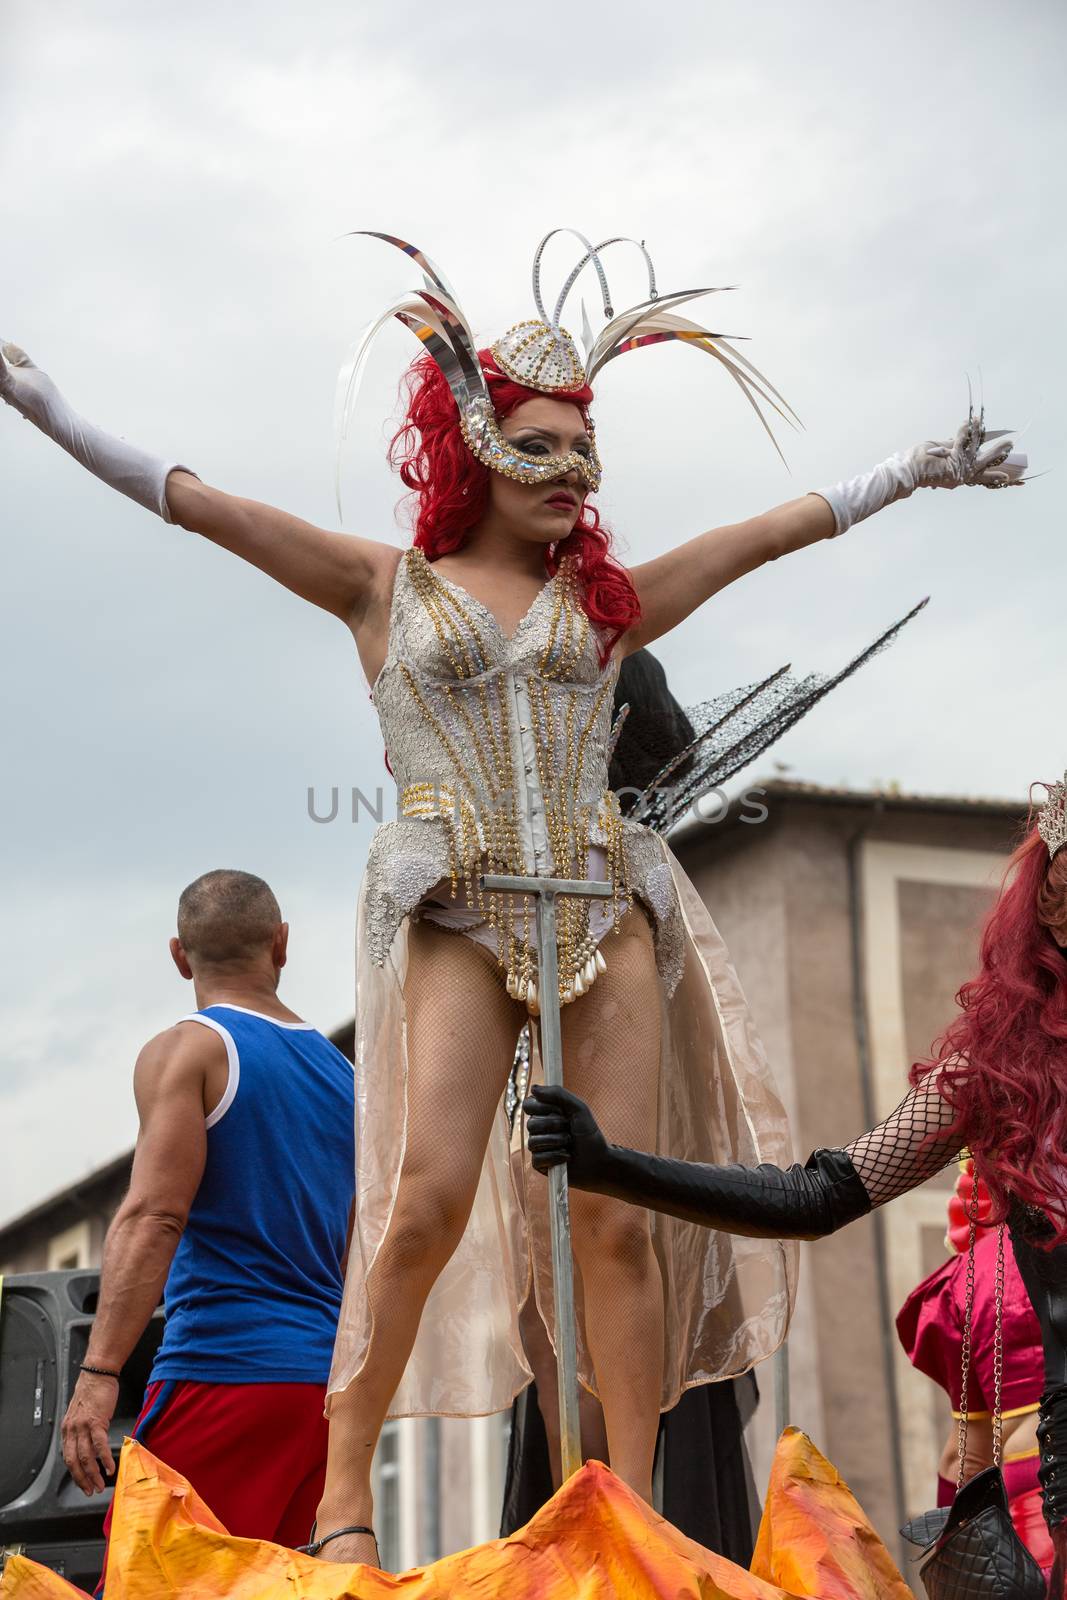  The Rome Gay Pride parade by wjarek